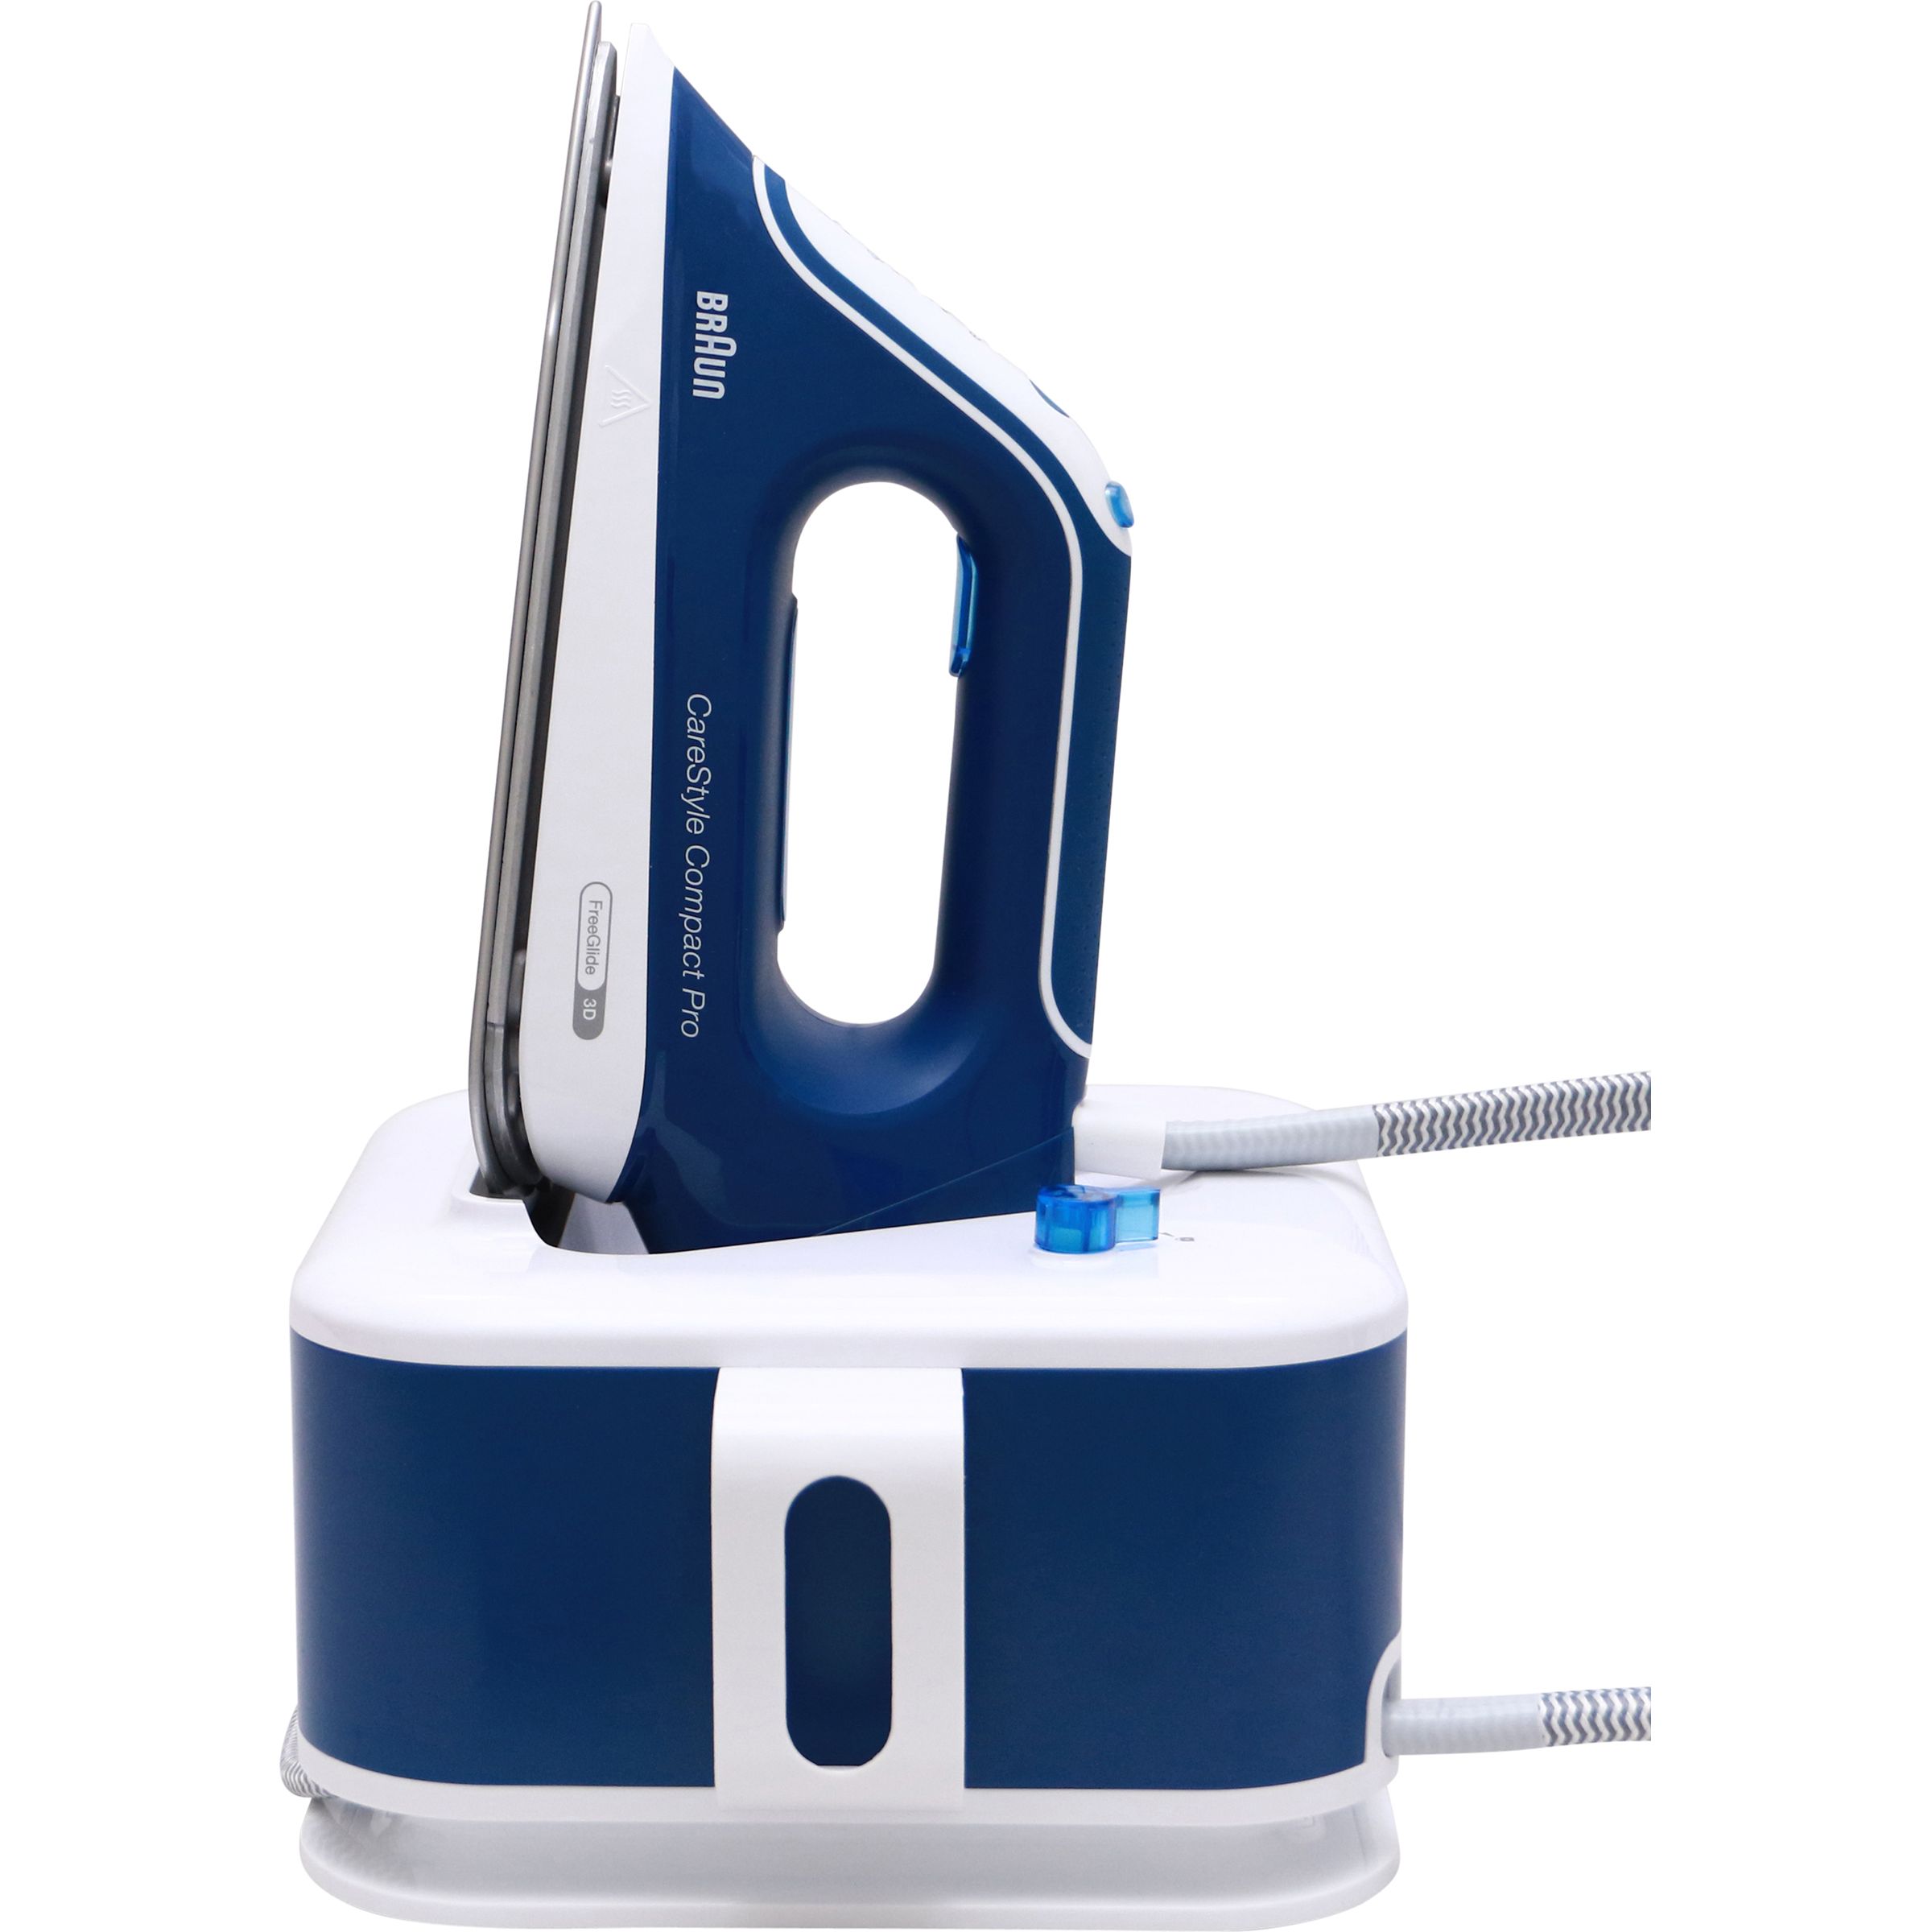 Прасувальна система Braun CareStyle Compact Pro IS 2565 BL біло-синя - фото 3